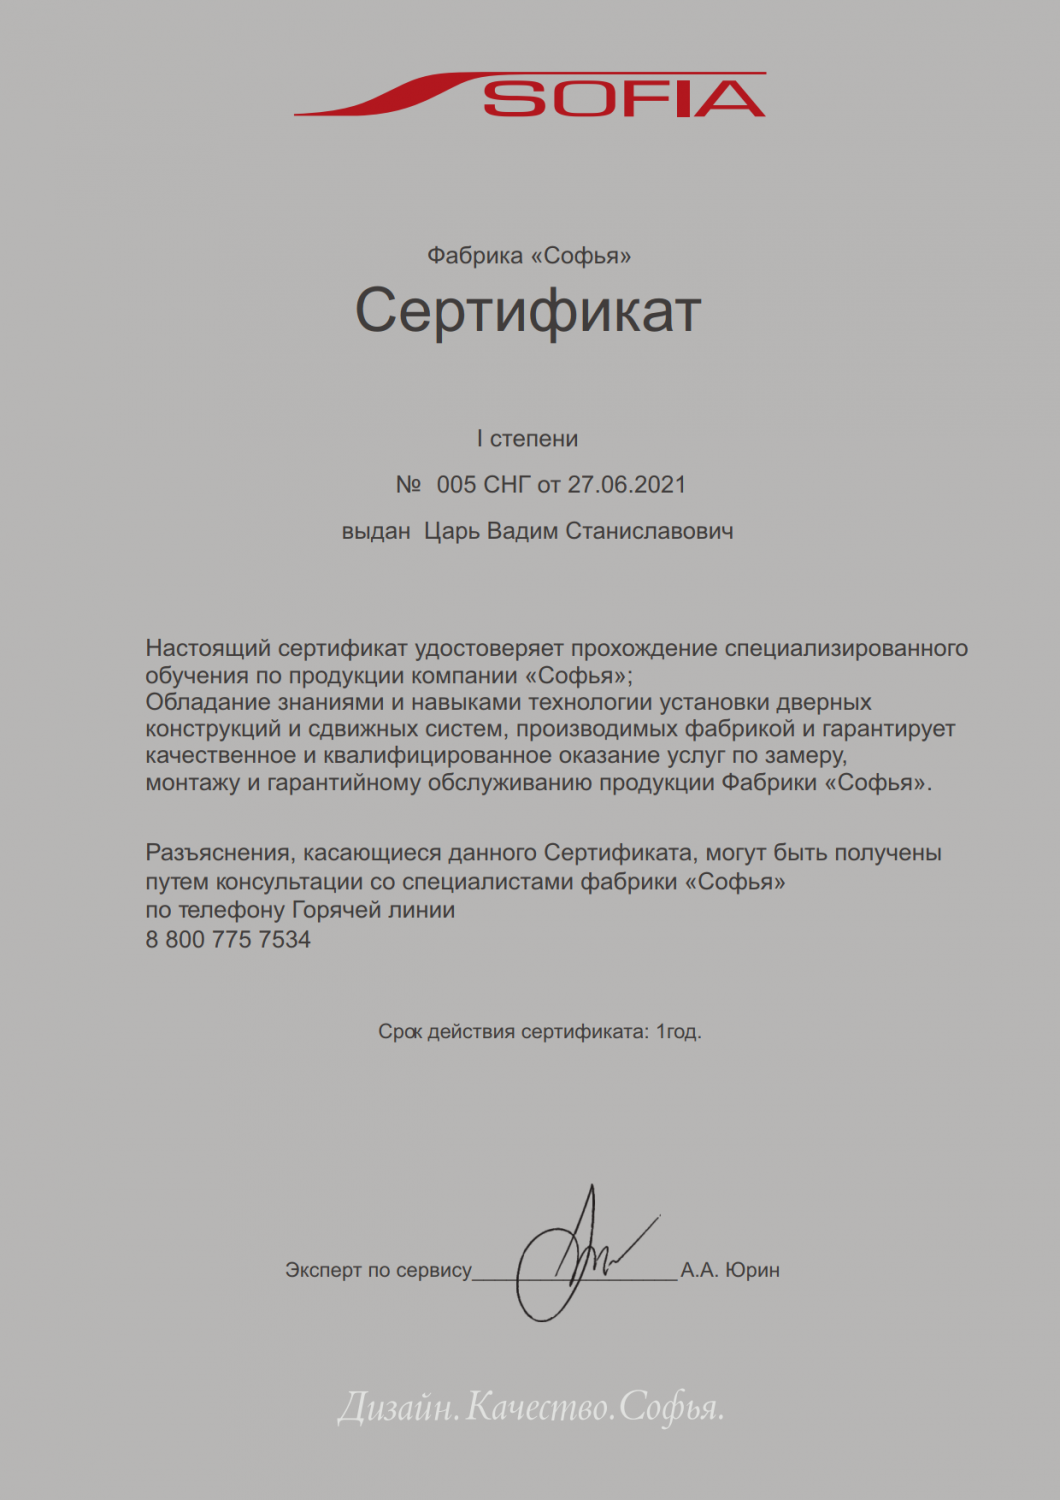 Сертификат "SOFIA"